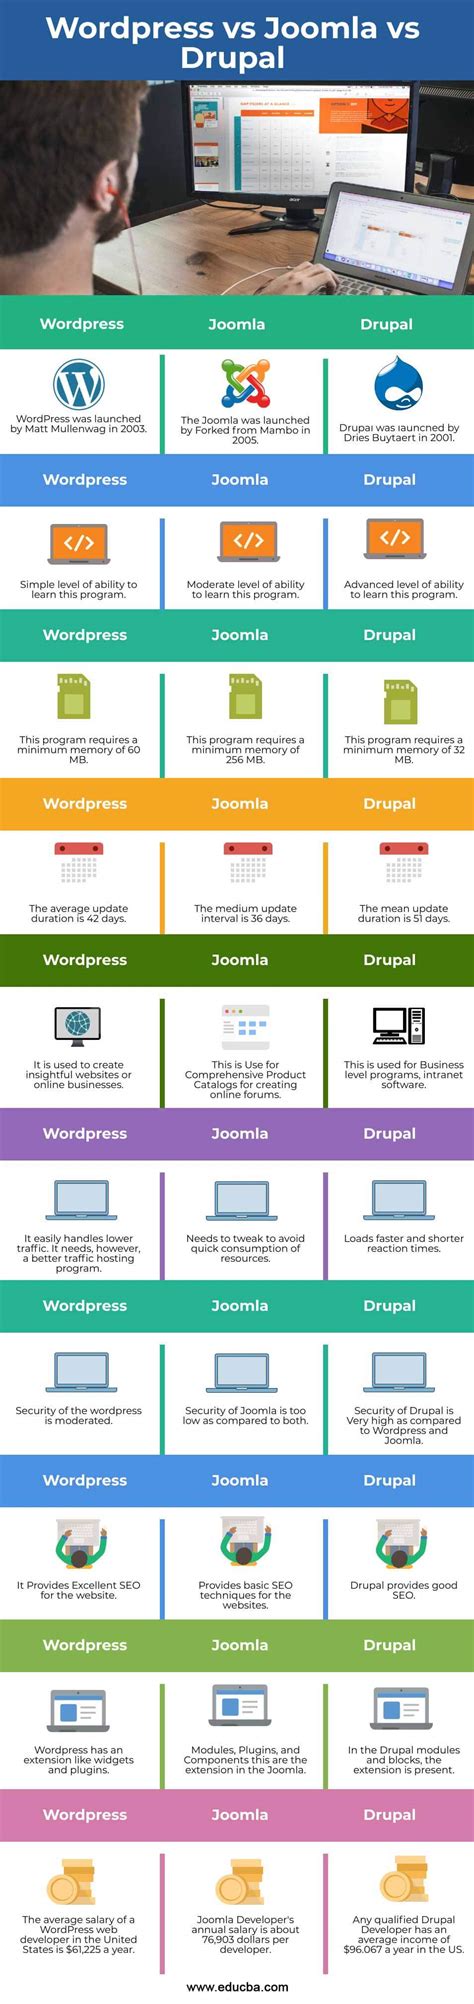 Wordpress Vs Joomla Vs Drupal Top Comparisons To Learn